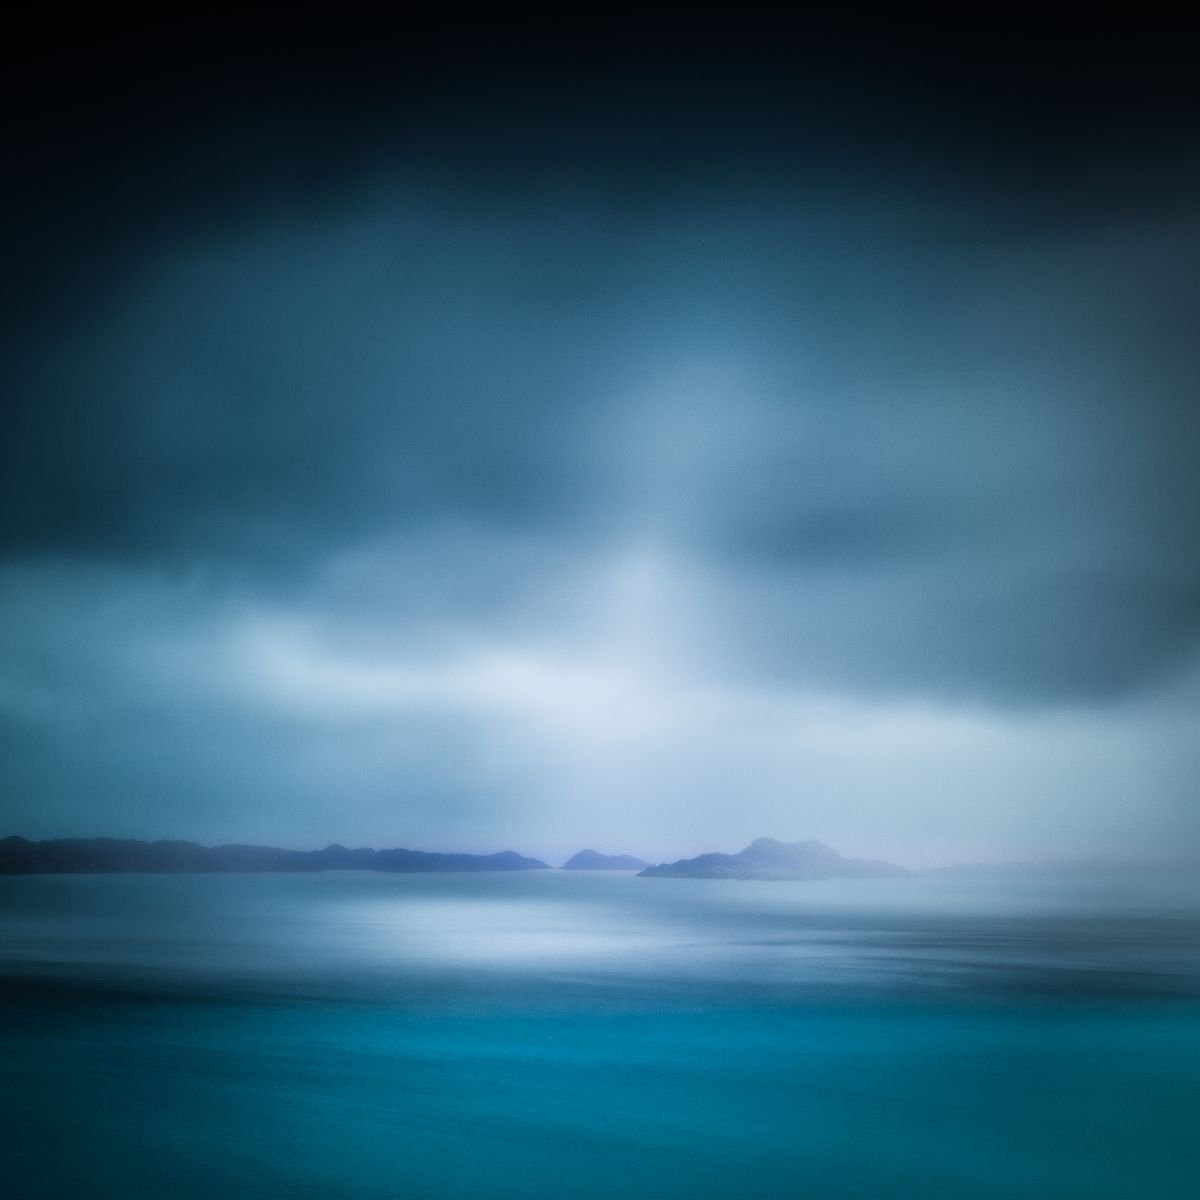 Island Dreams III, Teal Blue Abstract Landscape, Isle of Skye, Scotland by Lynne Douglas